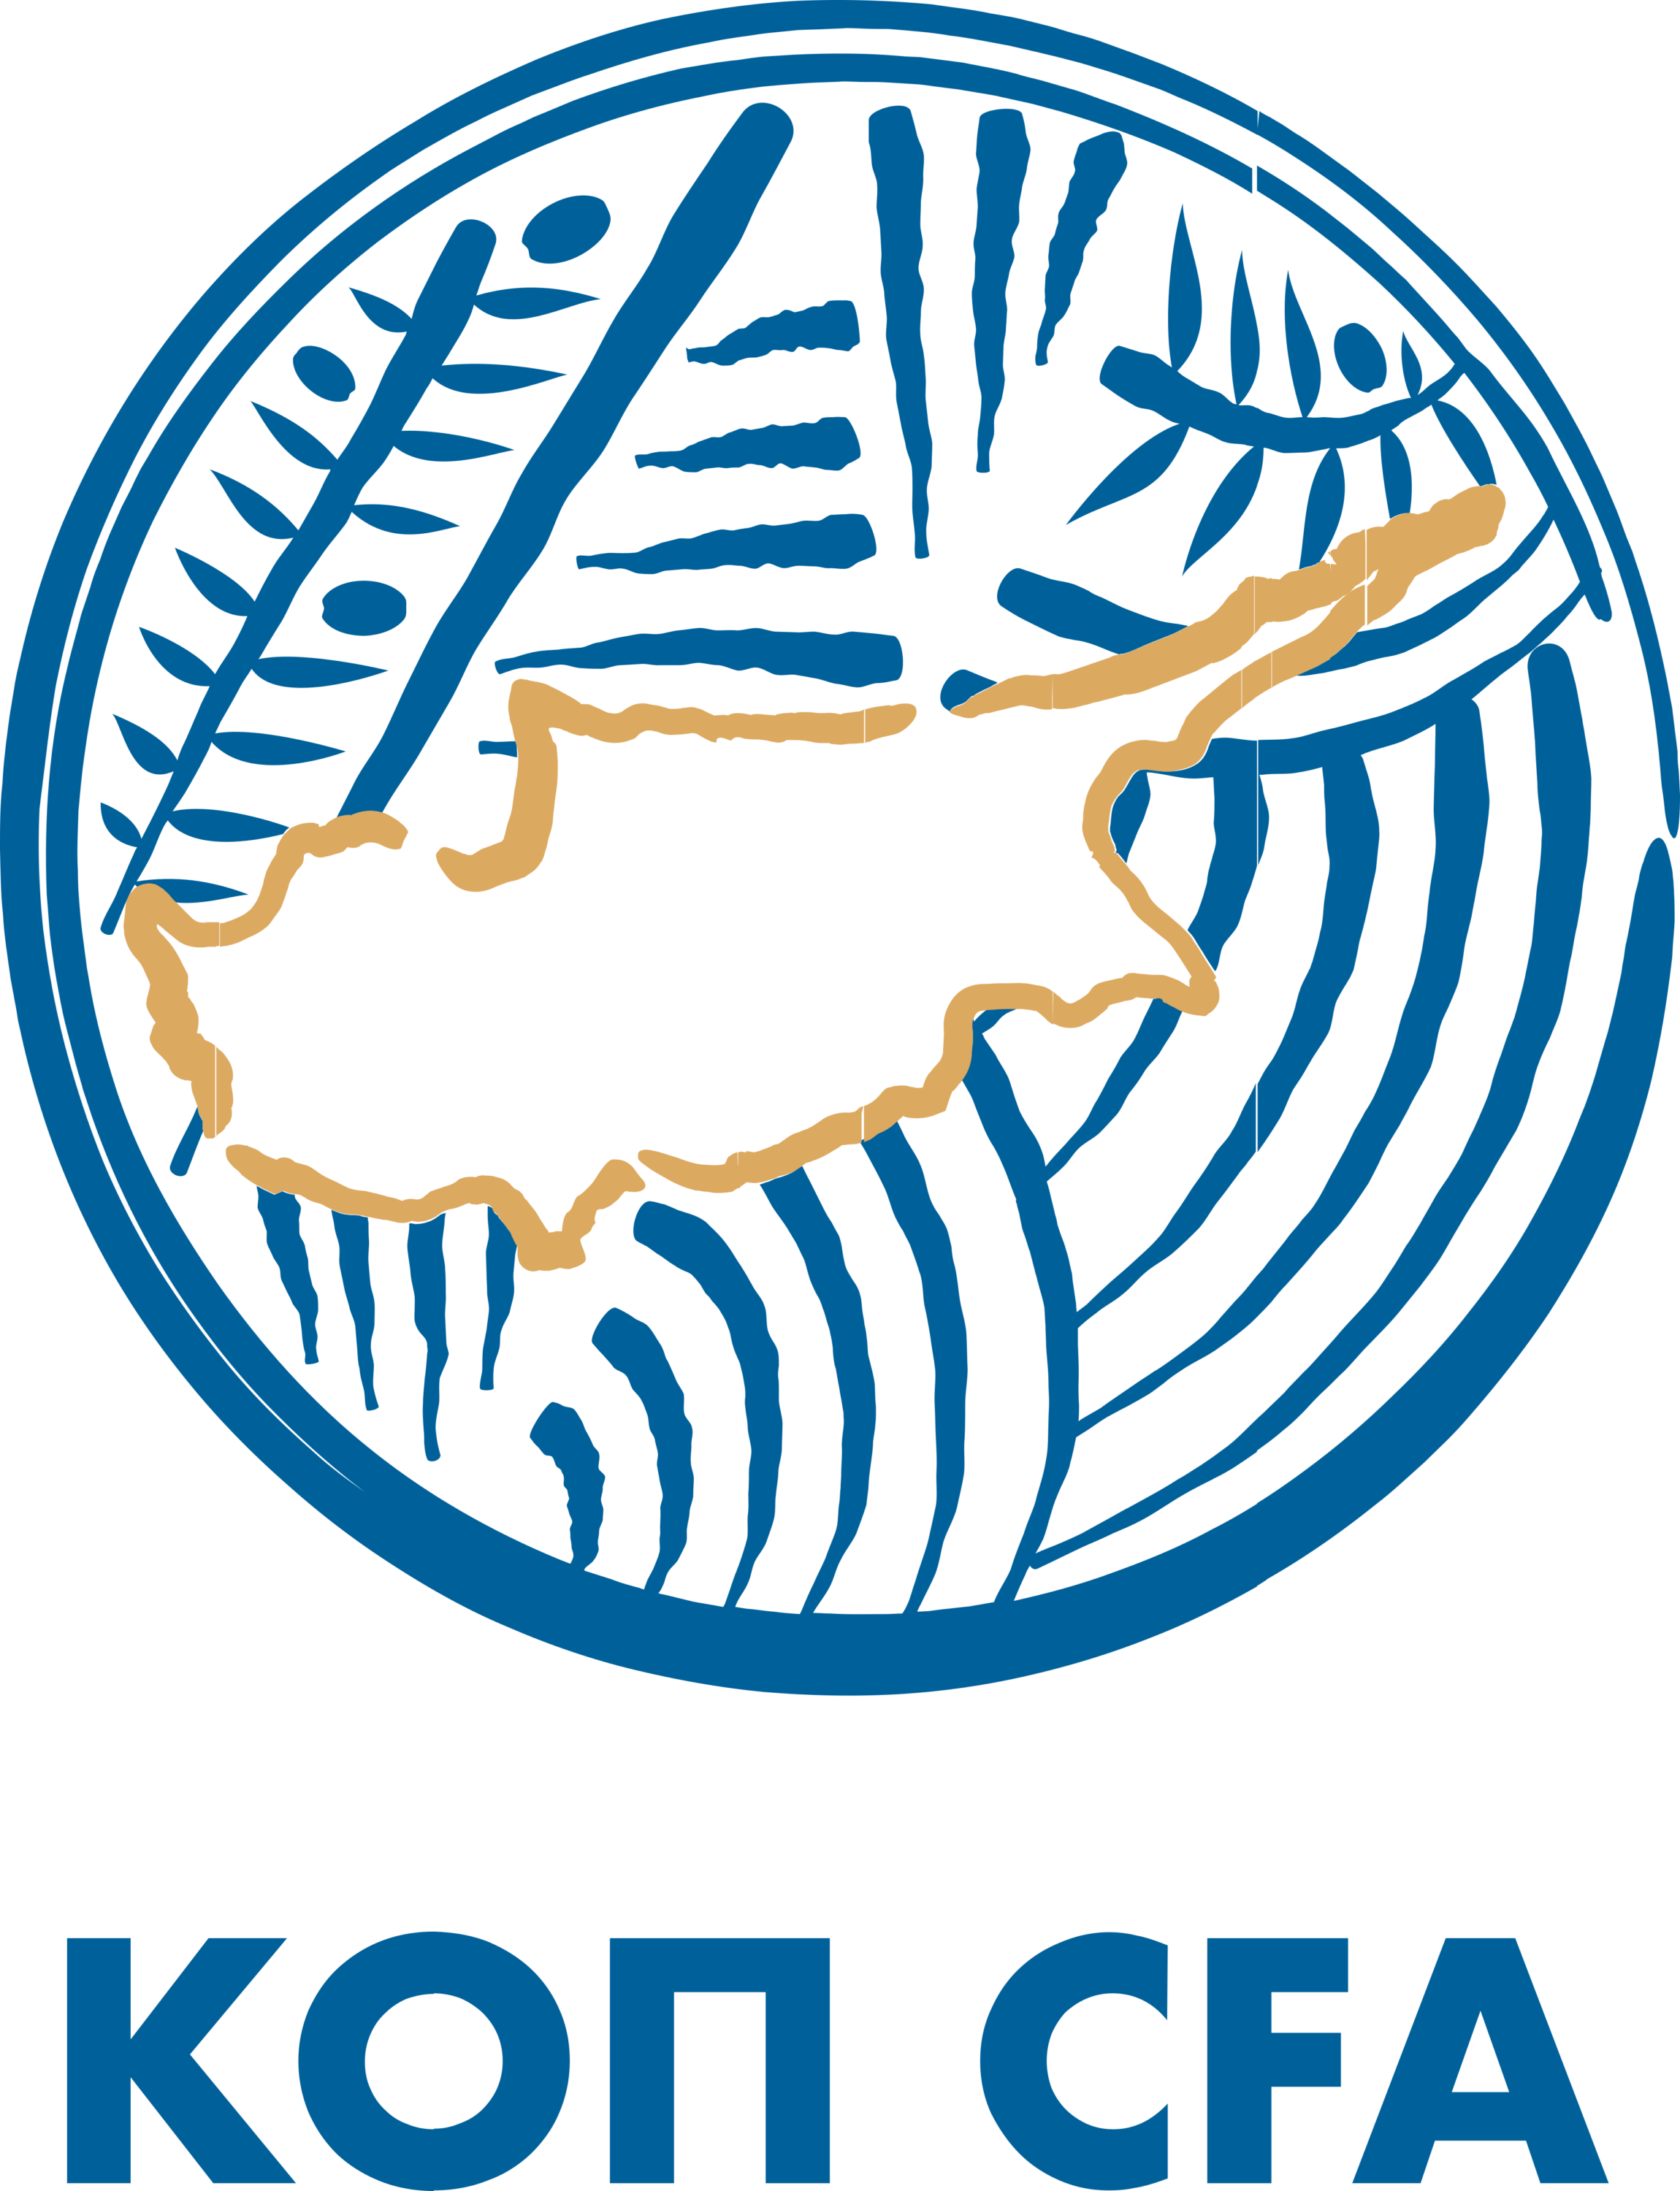 Cyprus Football Association Logo